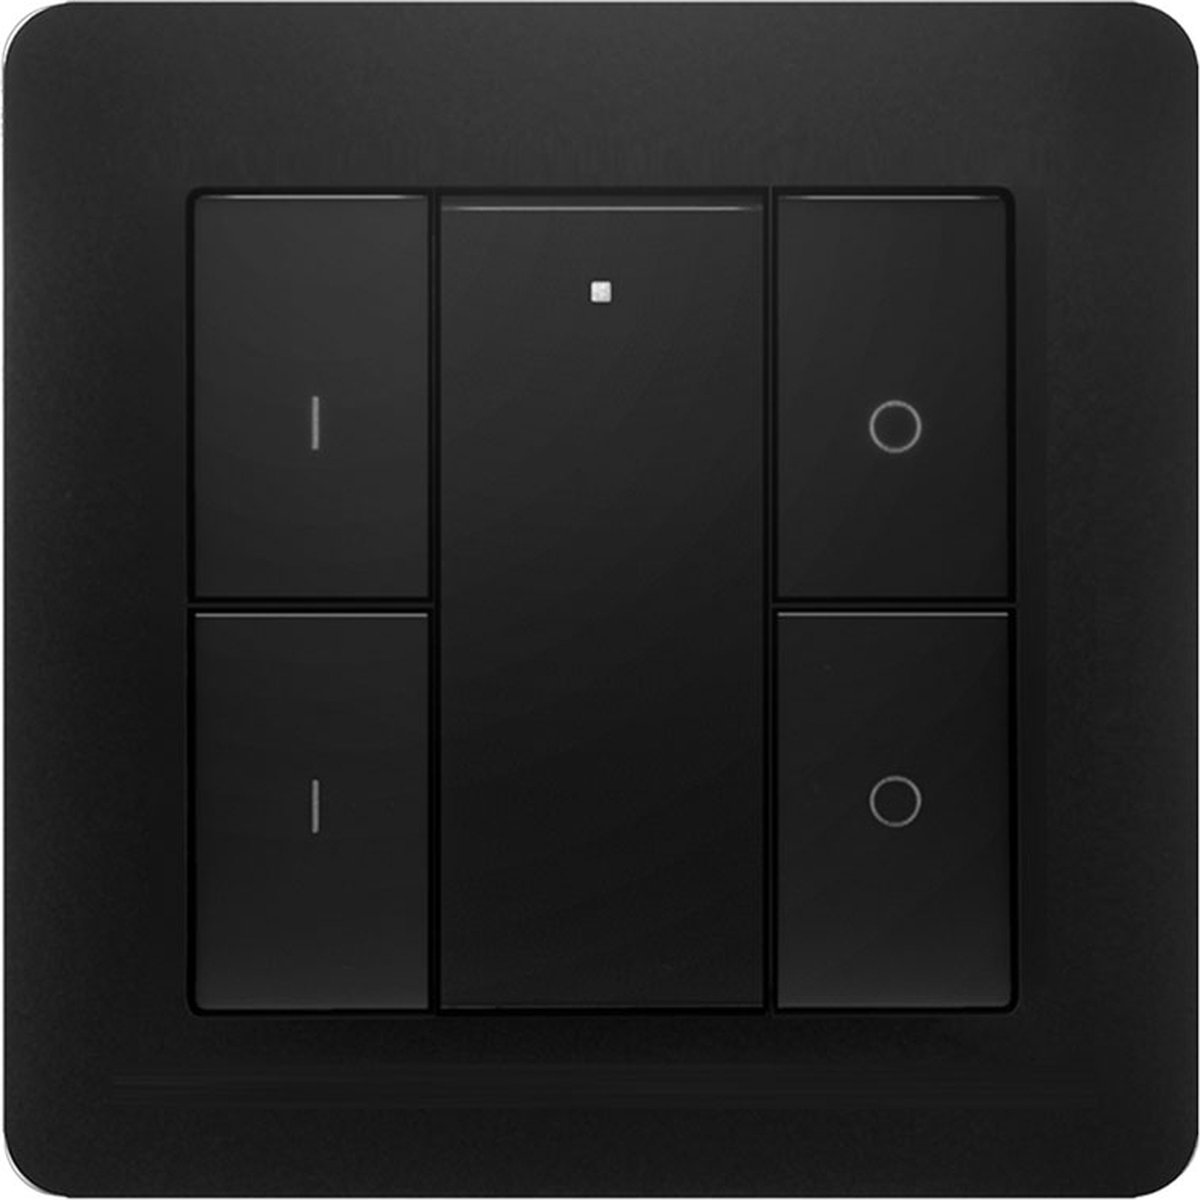 Zigbee interrupteur mural sans fil noir 2 zones - Incl. batterie